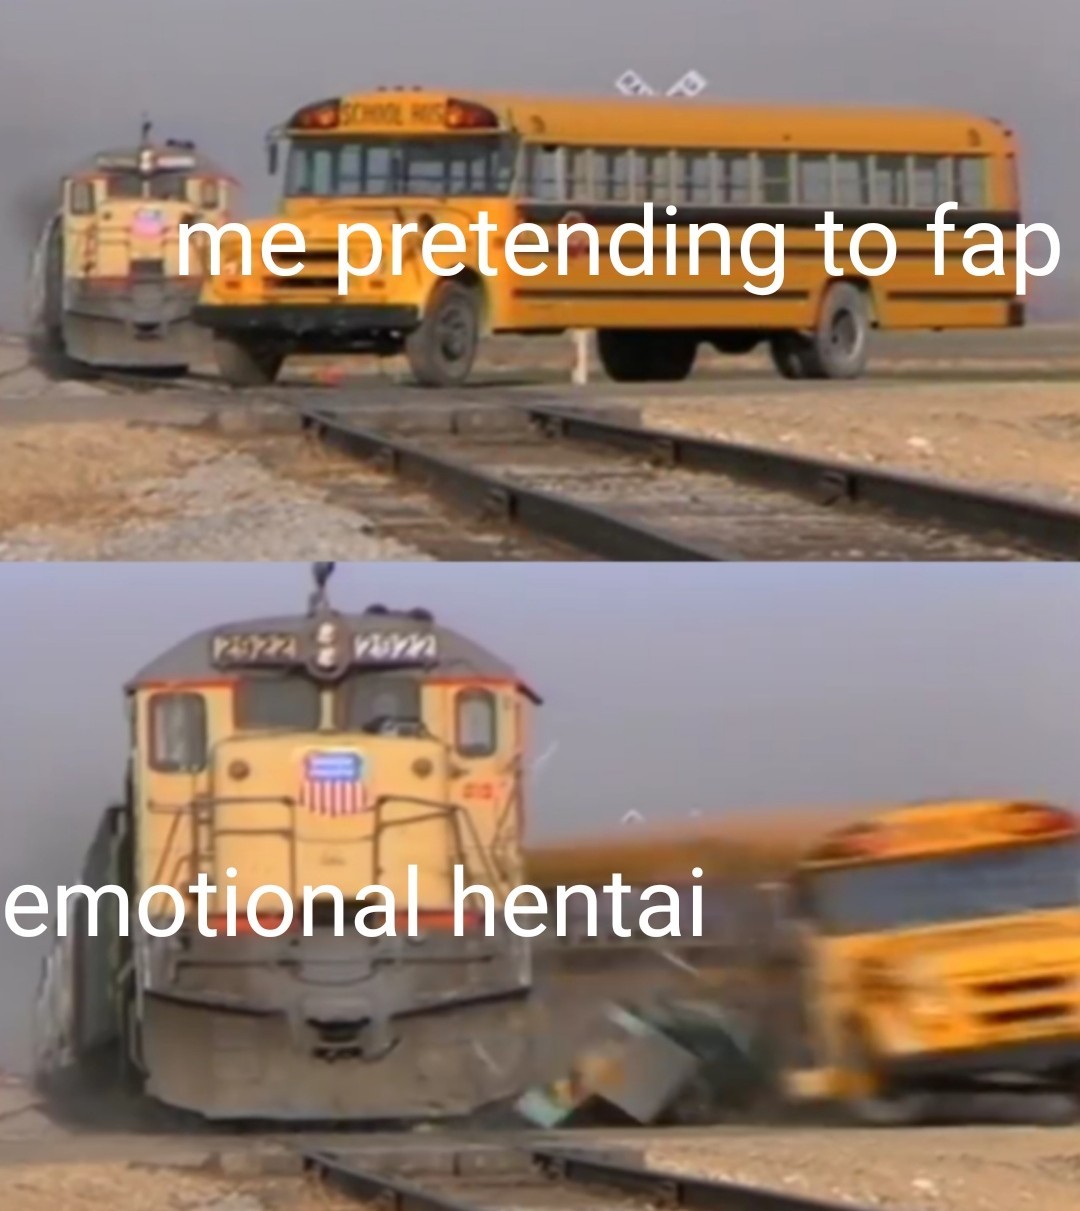 Emotional hentai is good - meme